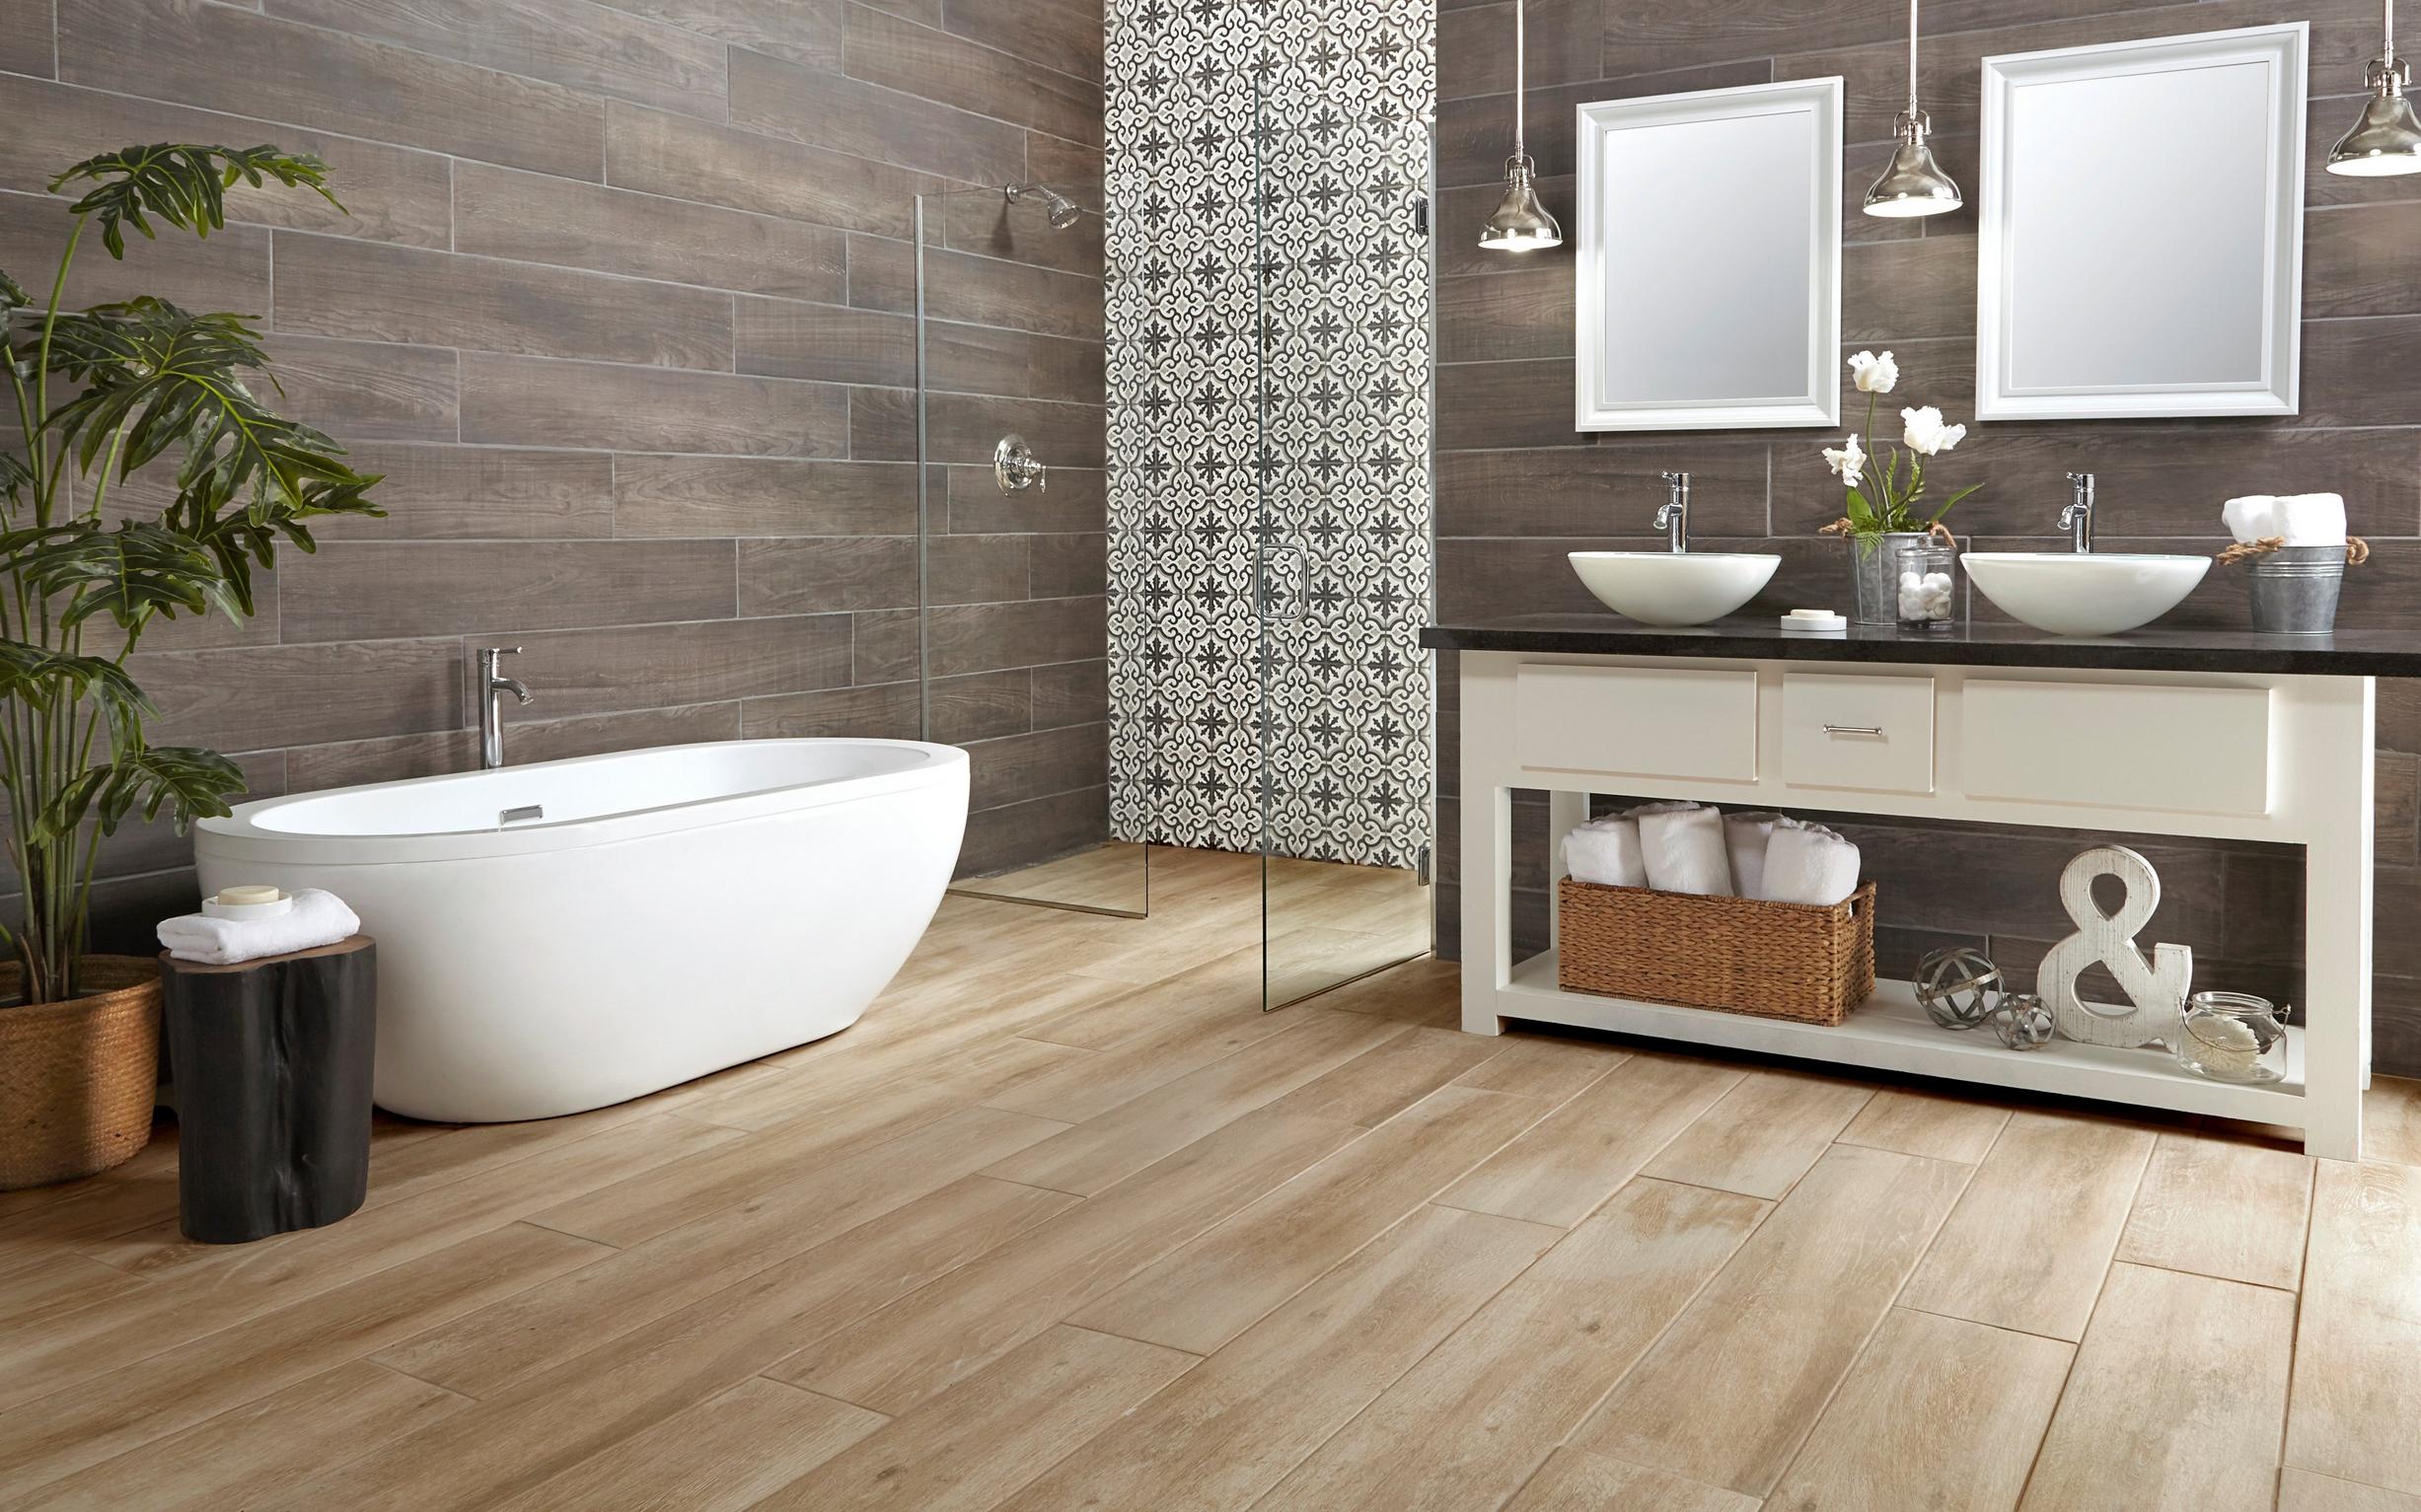 15 Ideas For Wood Floors In Bathrooms